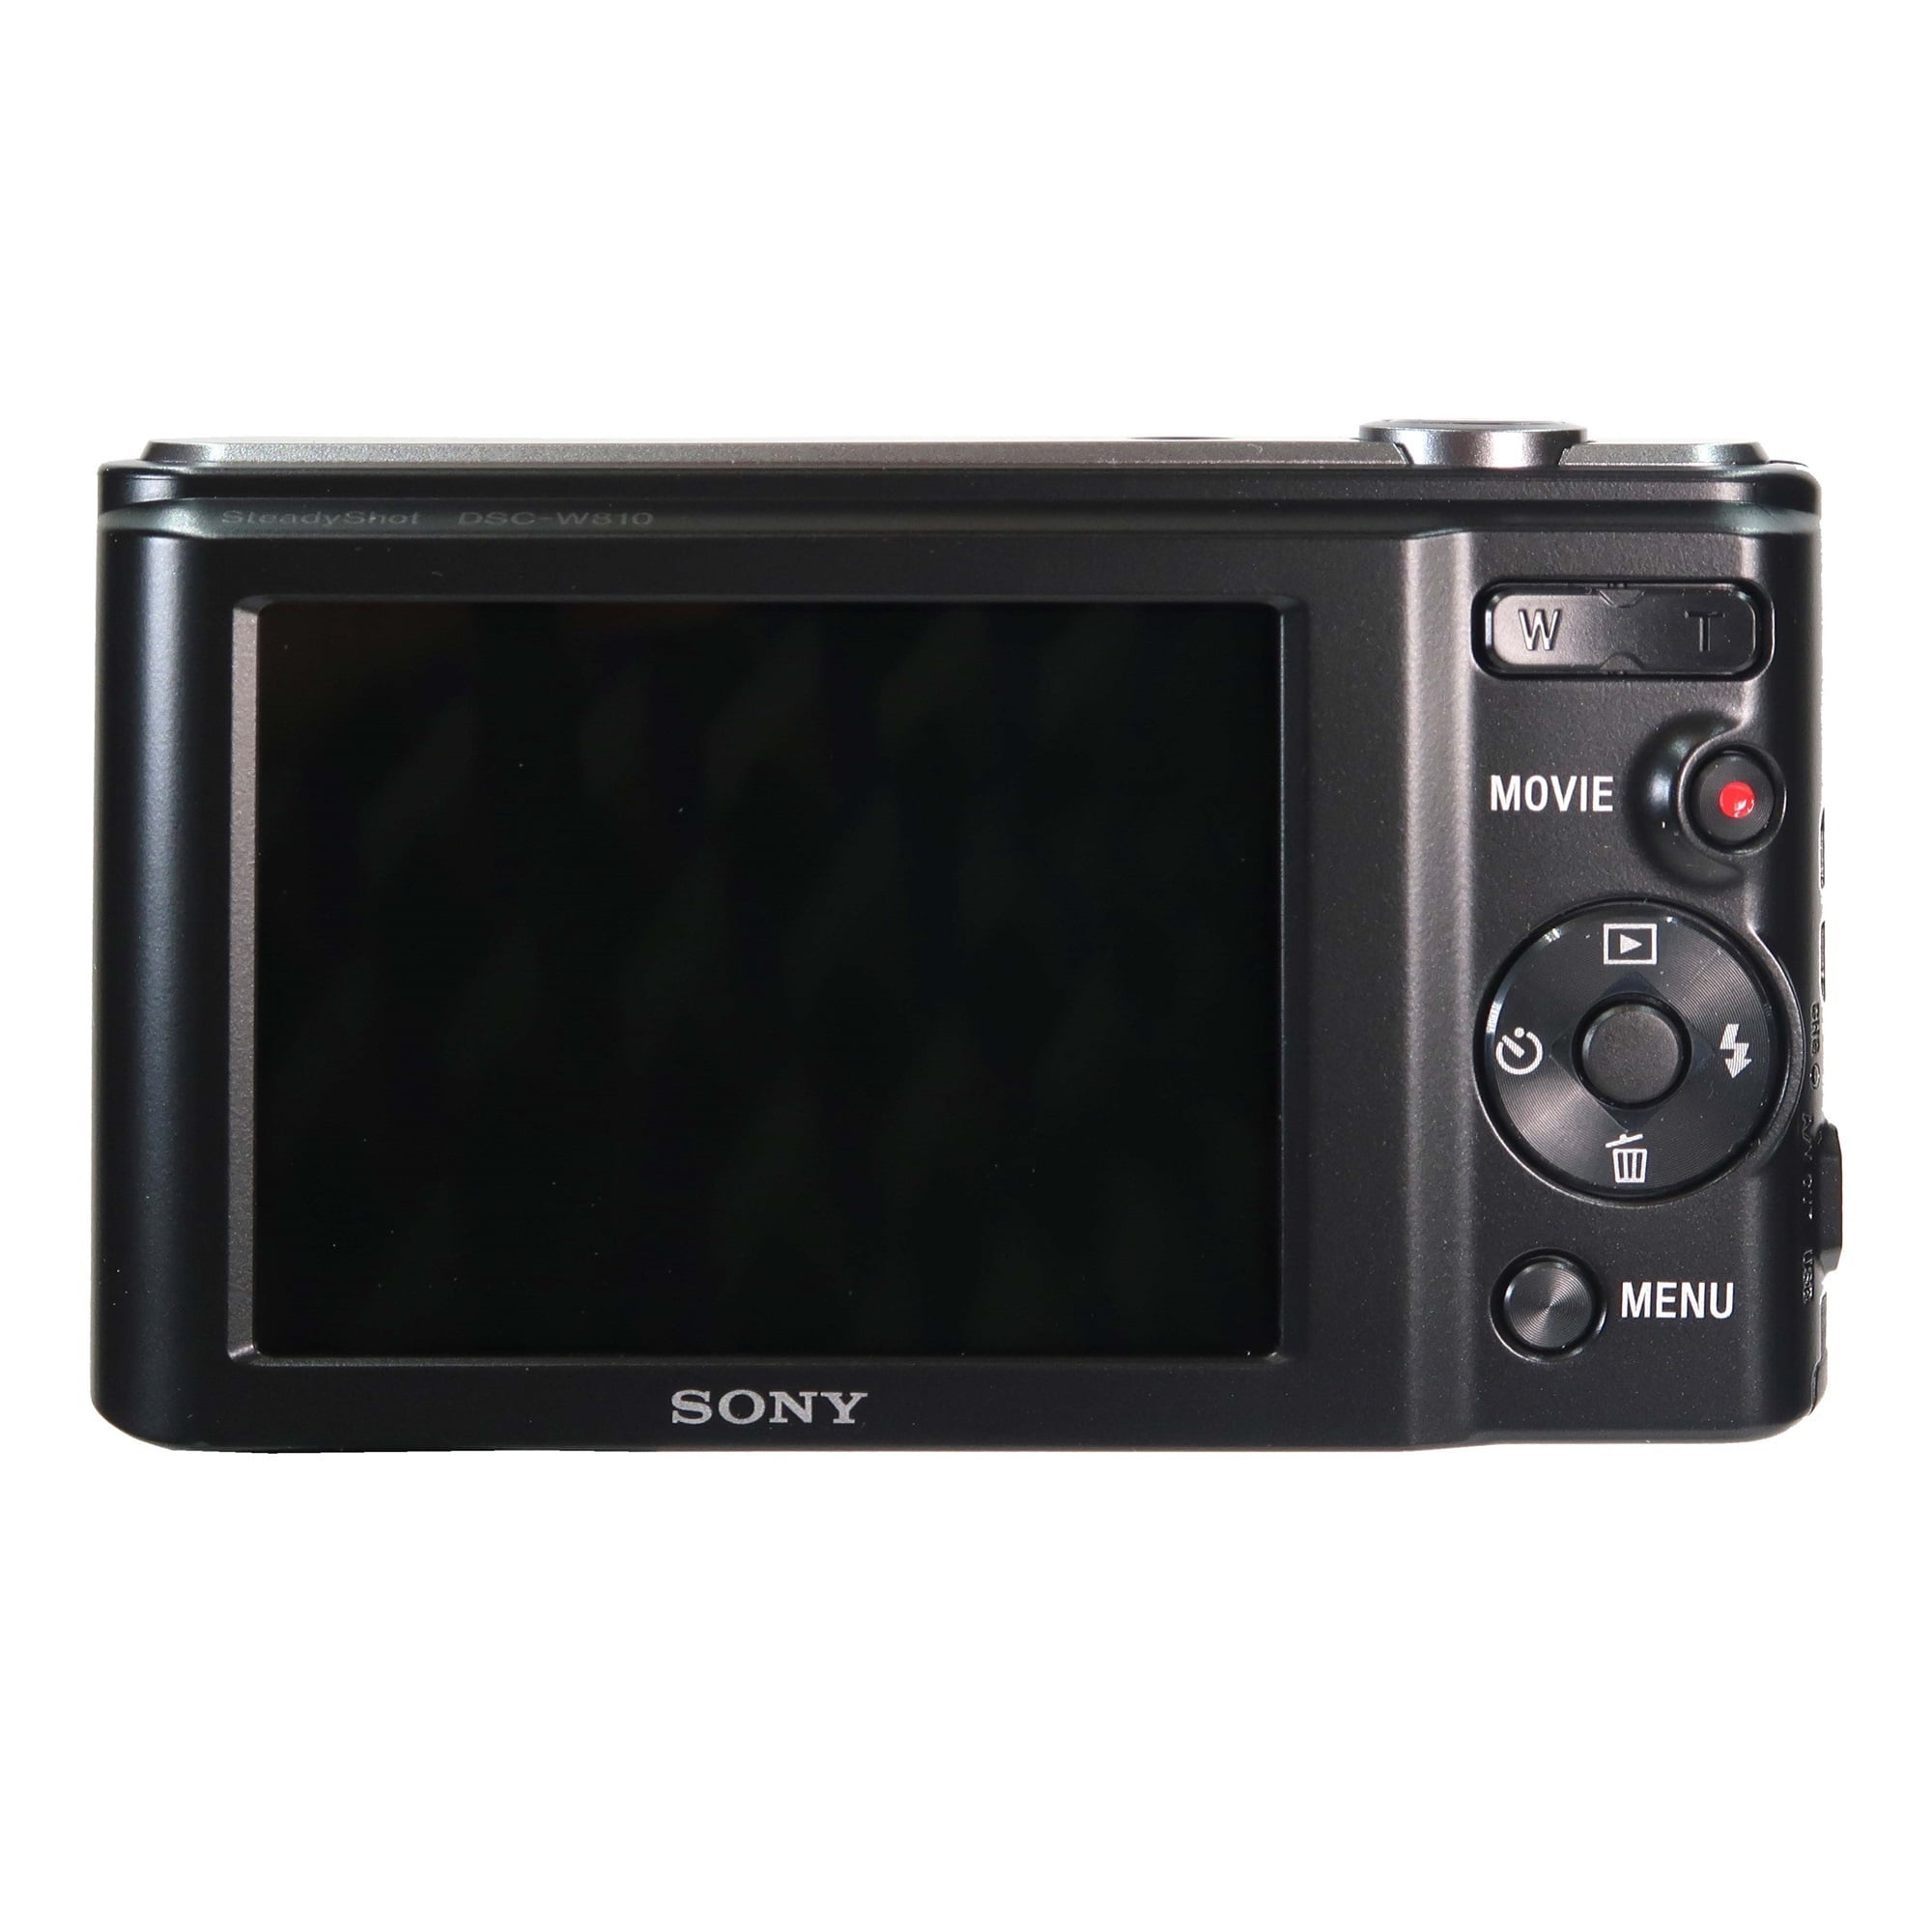 Sony SONY Digital Camera Cyber-shot W810 Optical 6x pink DSC-W810-P Japanese